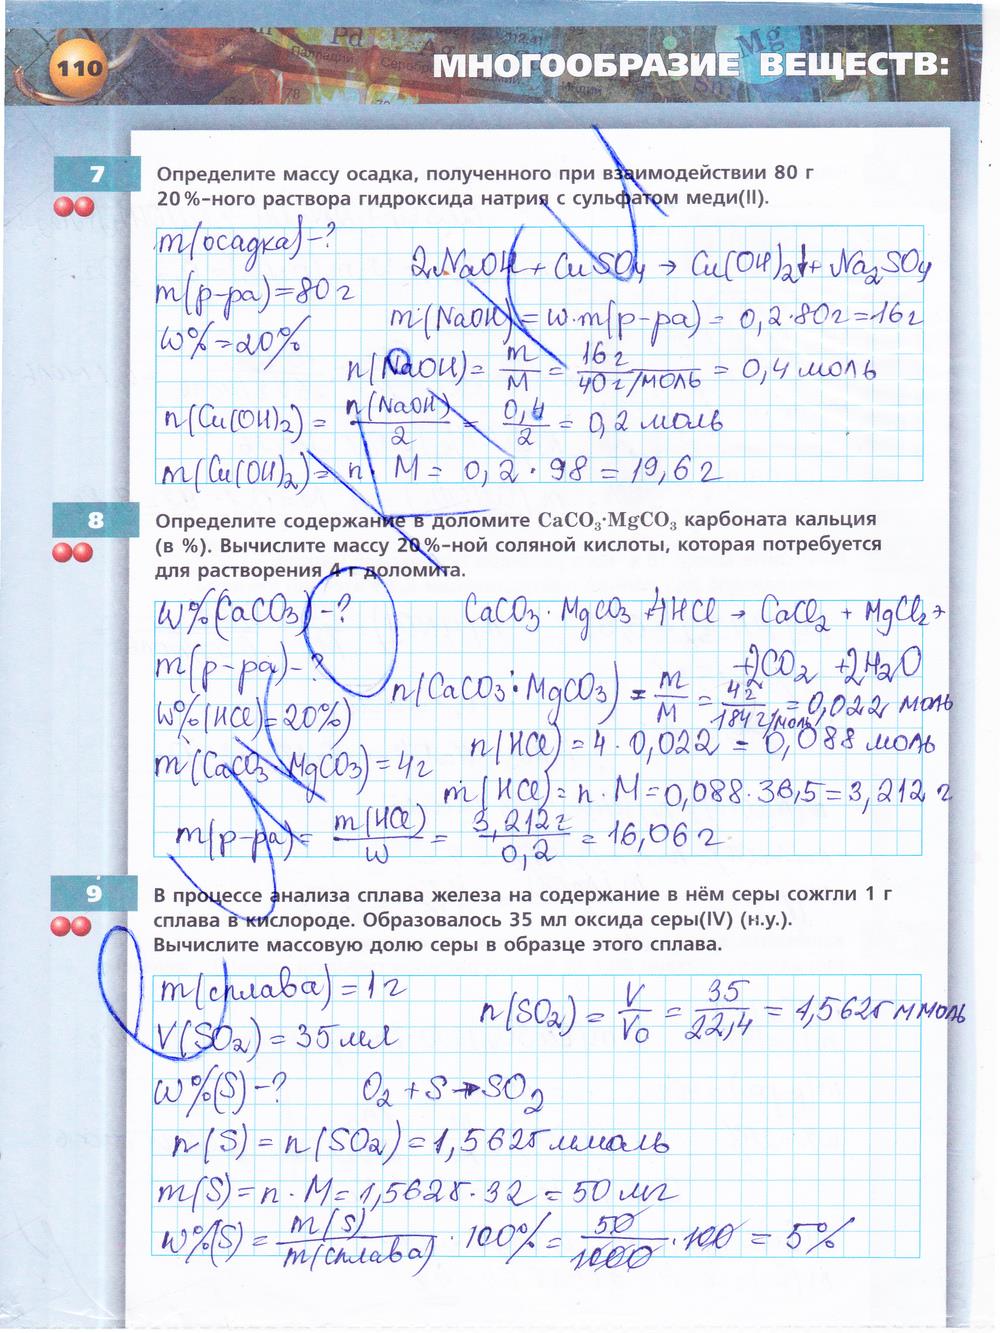 гдз 9 класс тетрадь-тренажёр страница 110 химия Гара